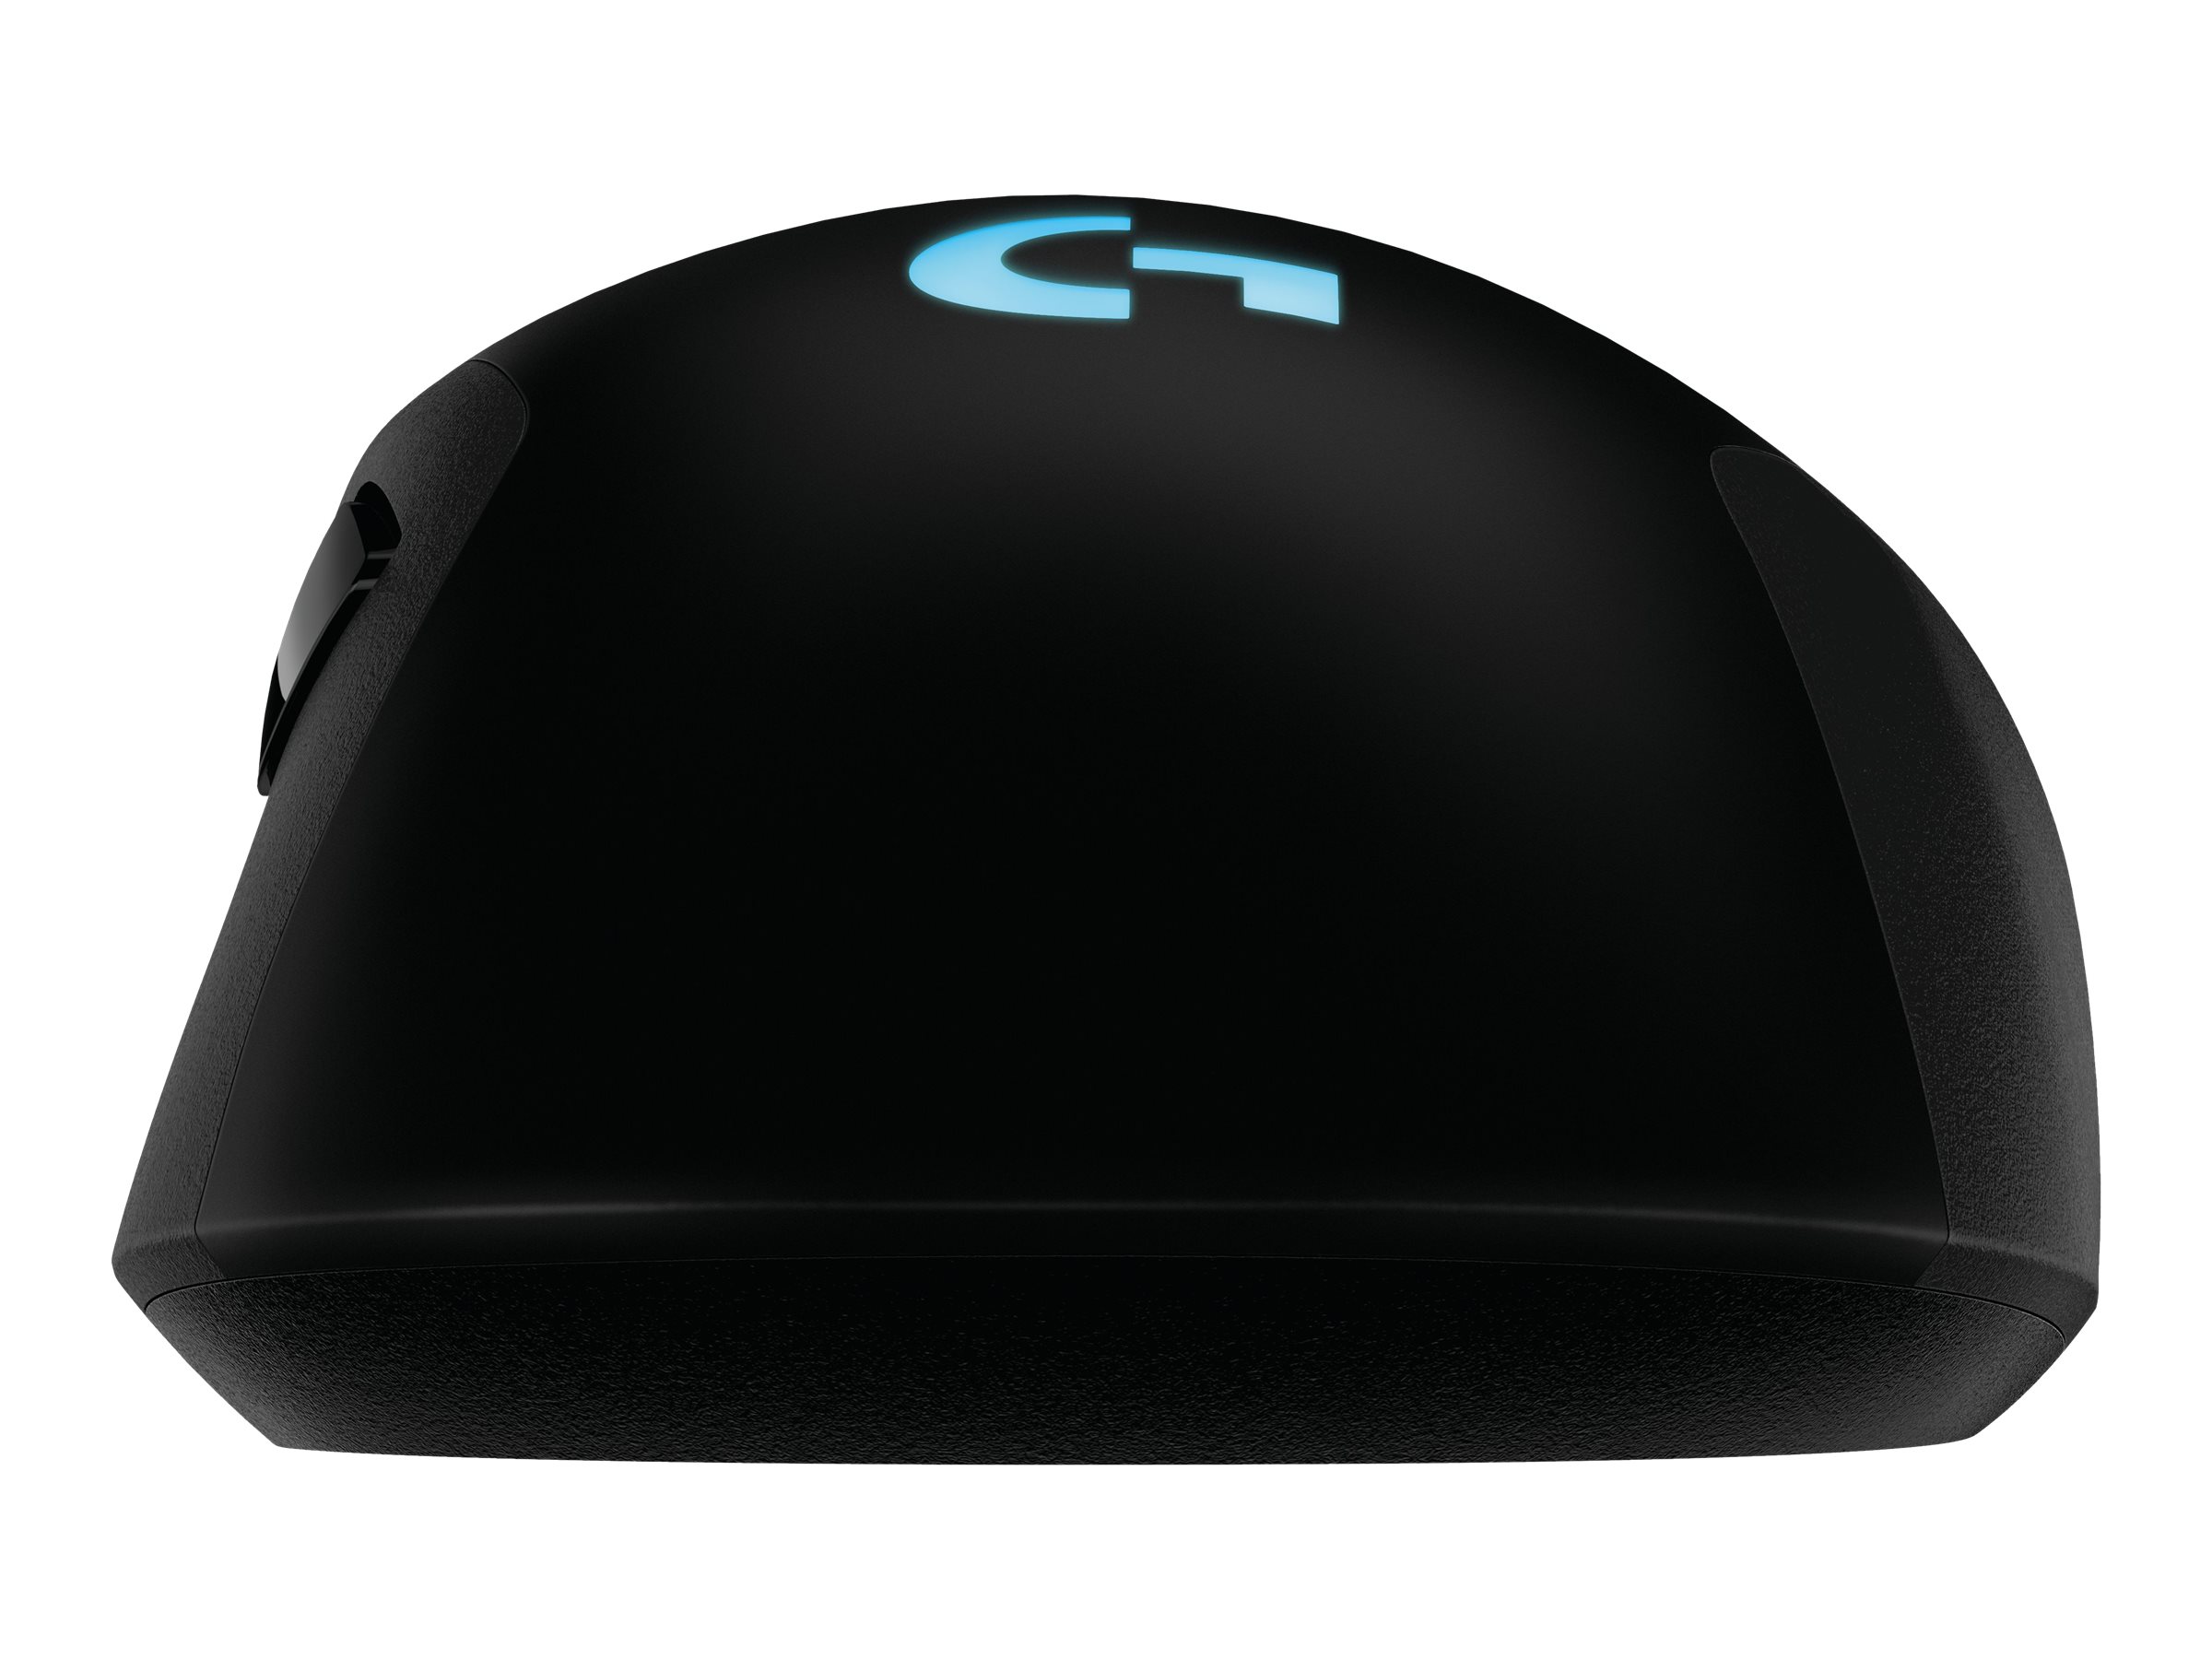 Logitech Gaming Mouse G703 - Maus - optisch - 6 Tasten - kabellos, kabelgebunden - 2.4 GHz